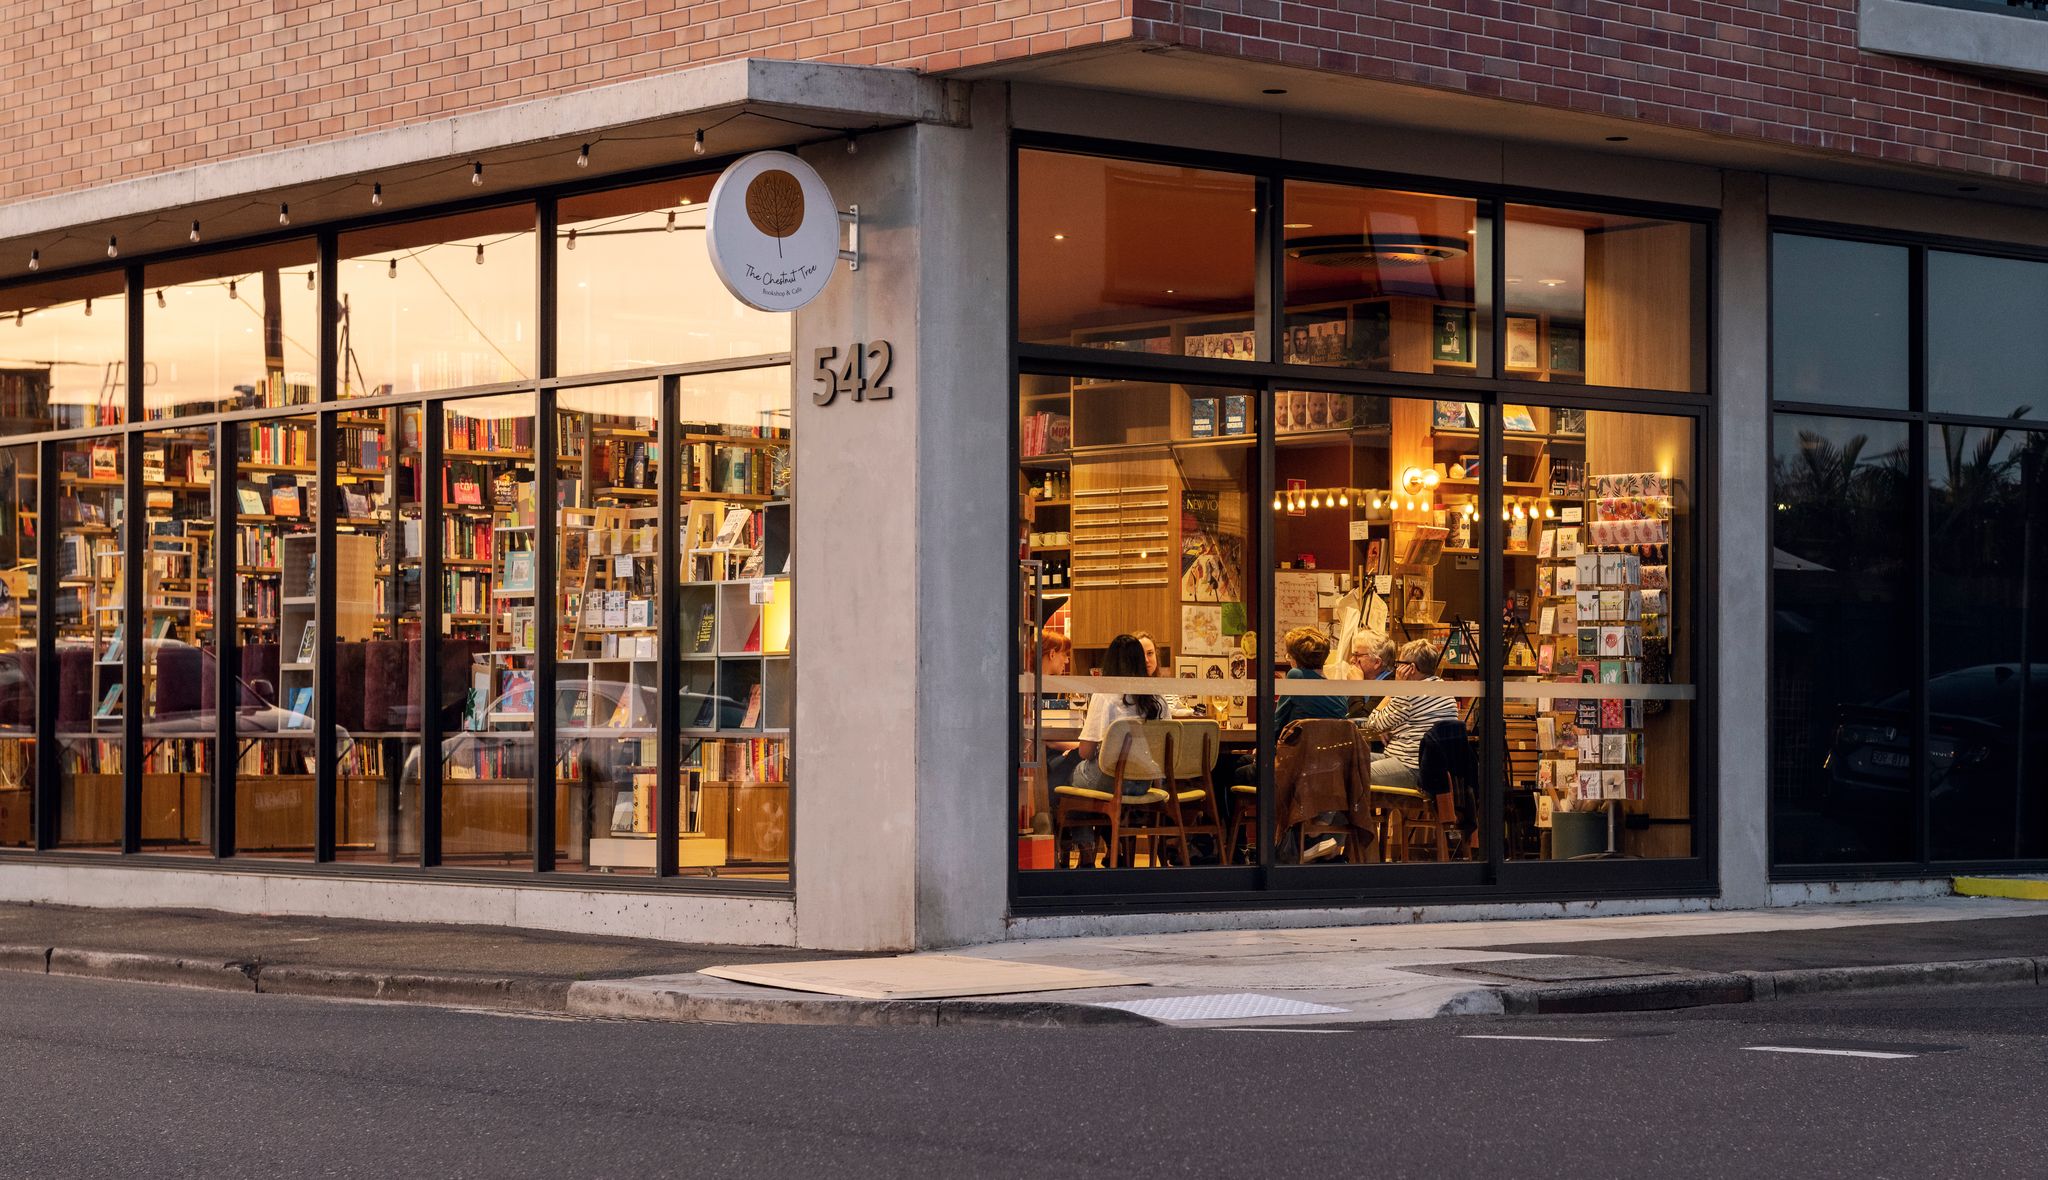 Featured Bookstore #4: The Chestnut Tree Bookshop